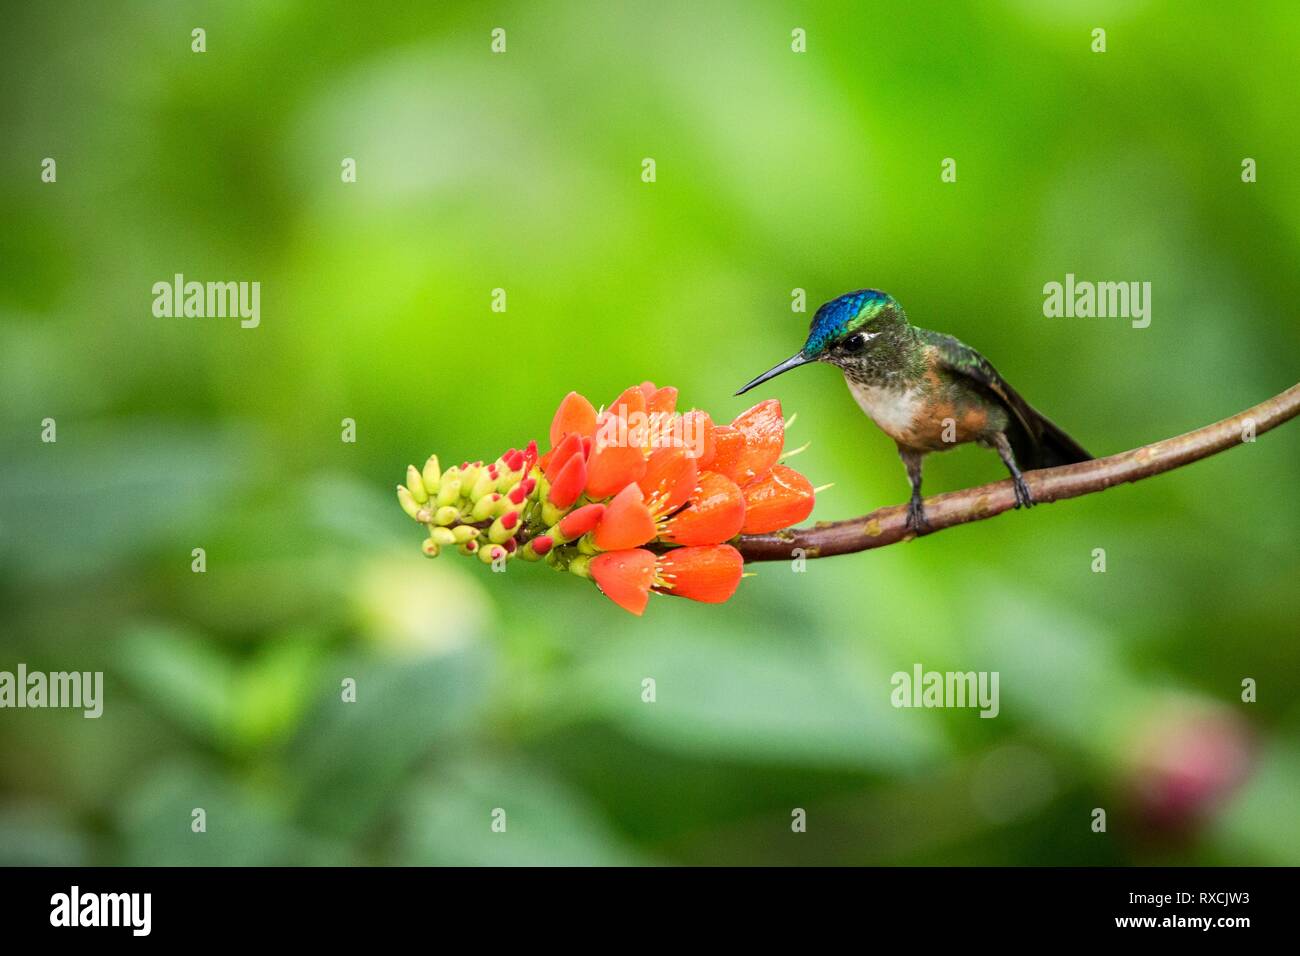 Hummingbird sitting on orange flower,tropical forest,Brazil,bird sucking nectar from blossom in garden,bird perching on plant,nature wildlife scene,ca Stock Photo